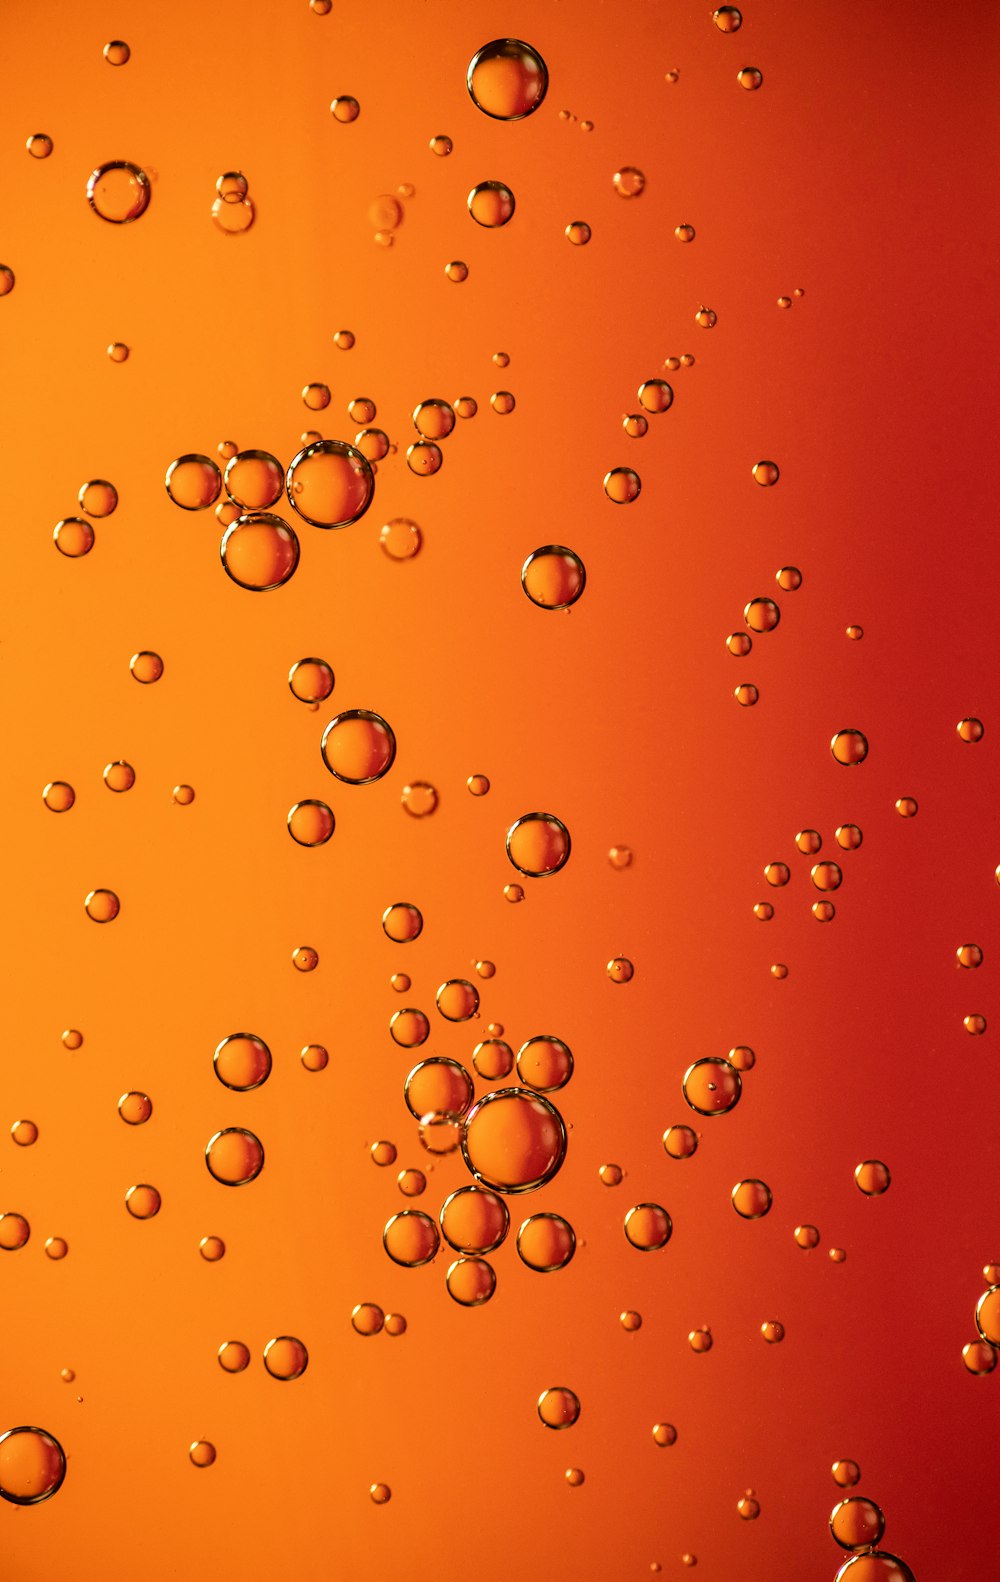 gotículas de água na superfície laranja